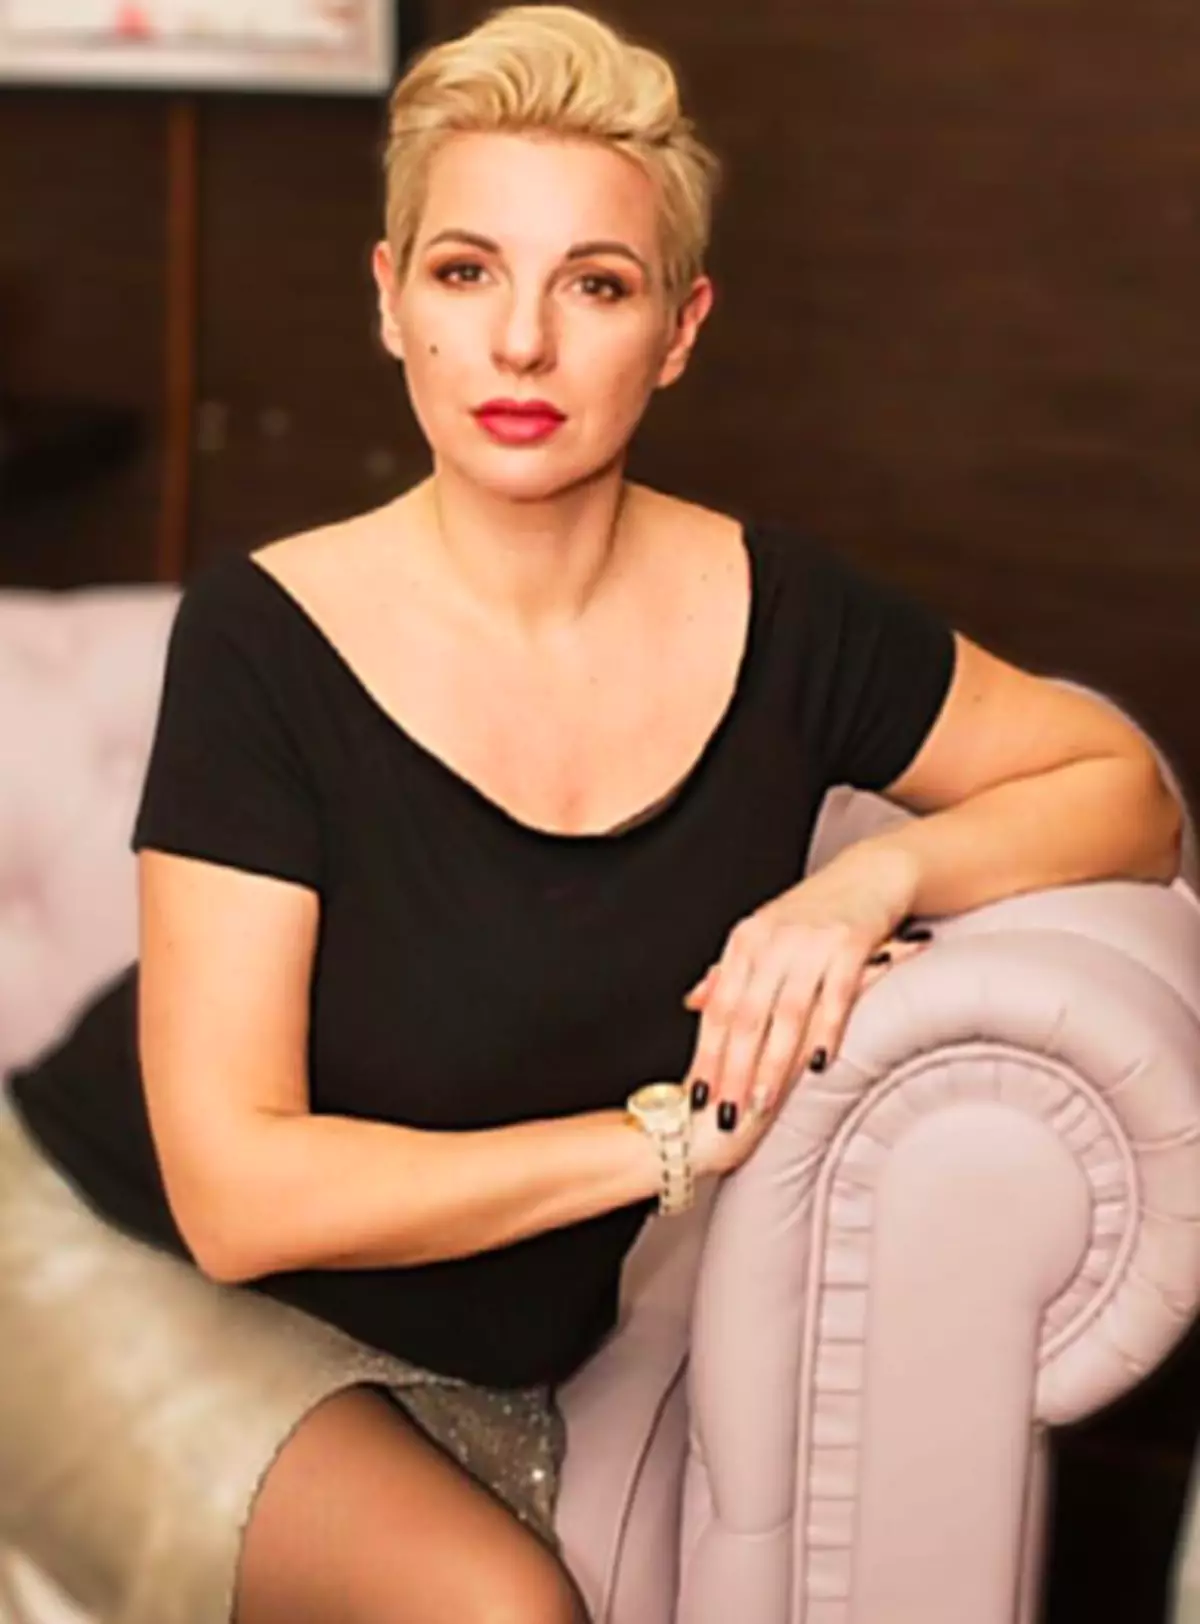 Natalia Solowyova, Meister des permanenten Make-ups